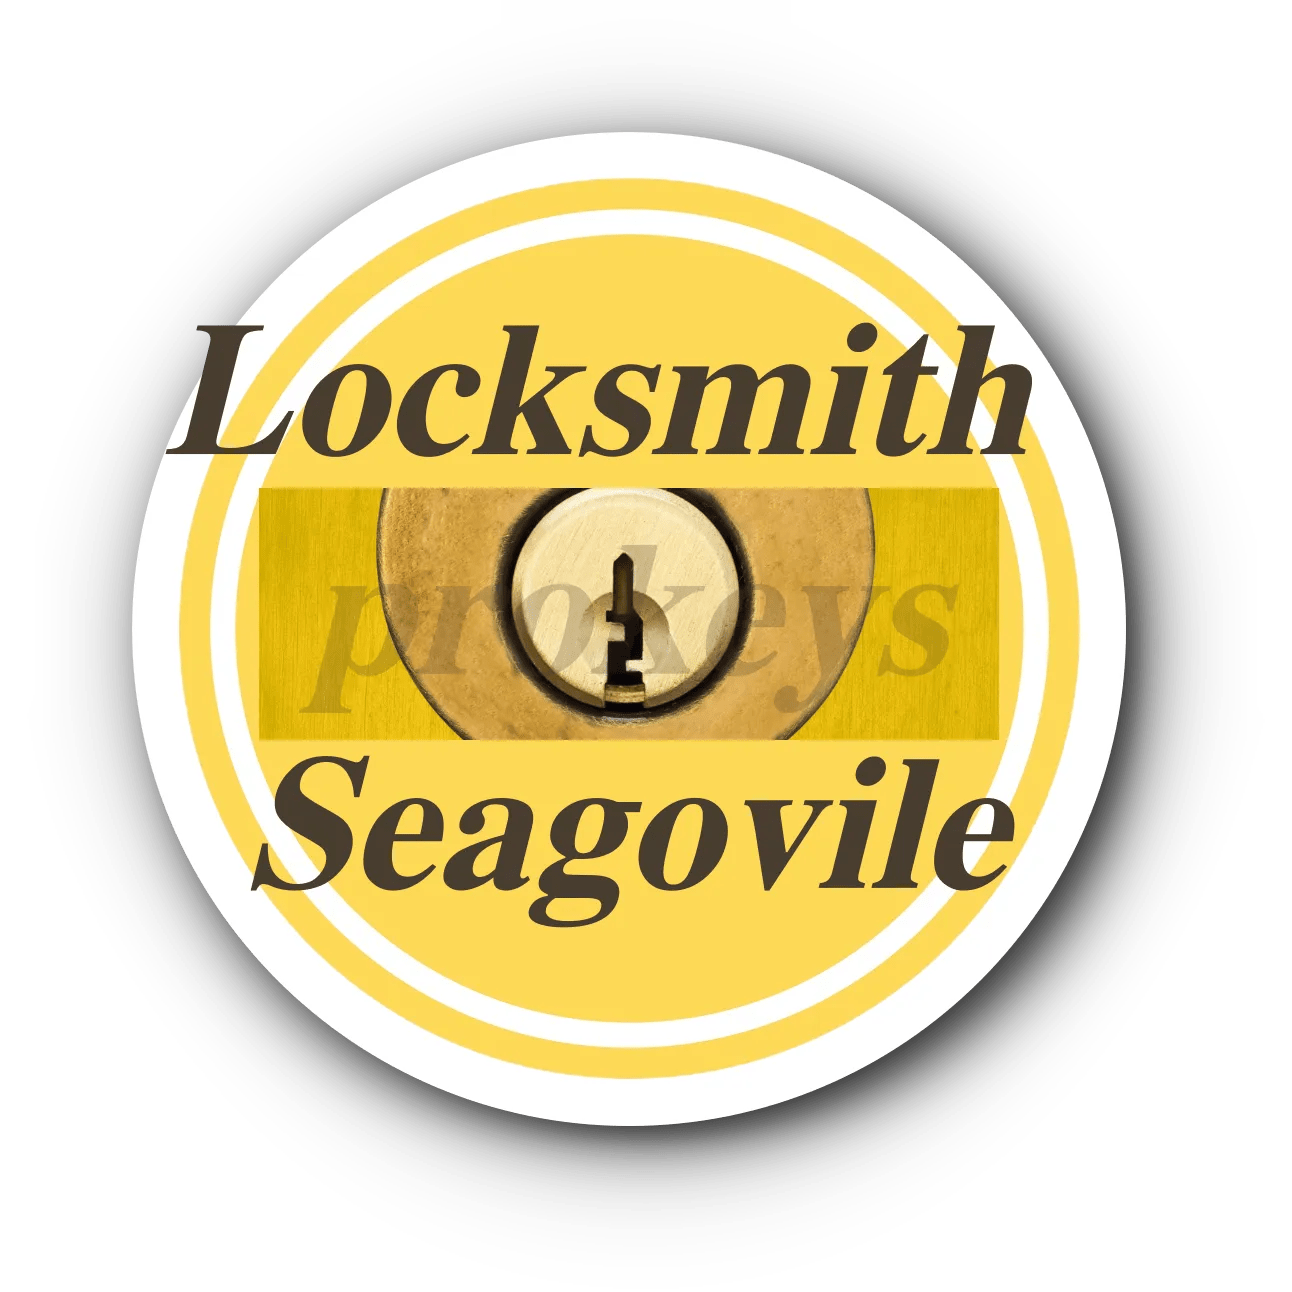 seagoville locksmith